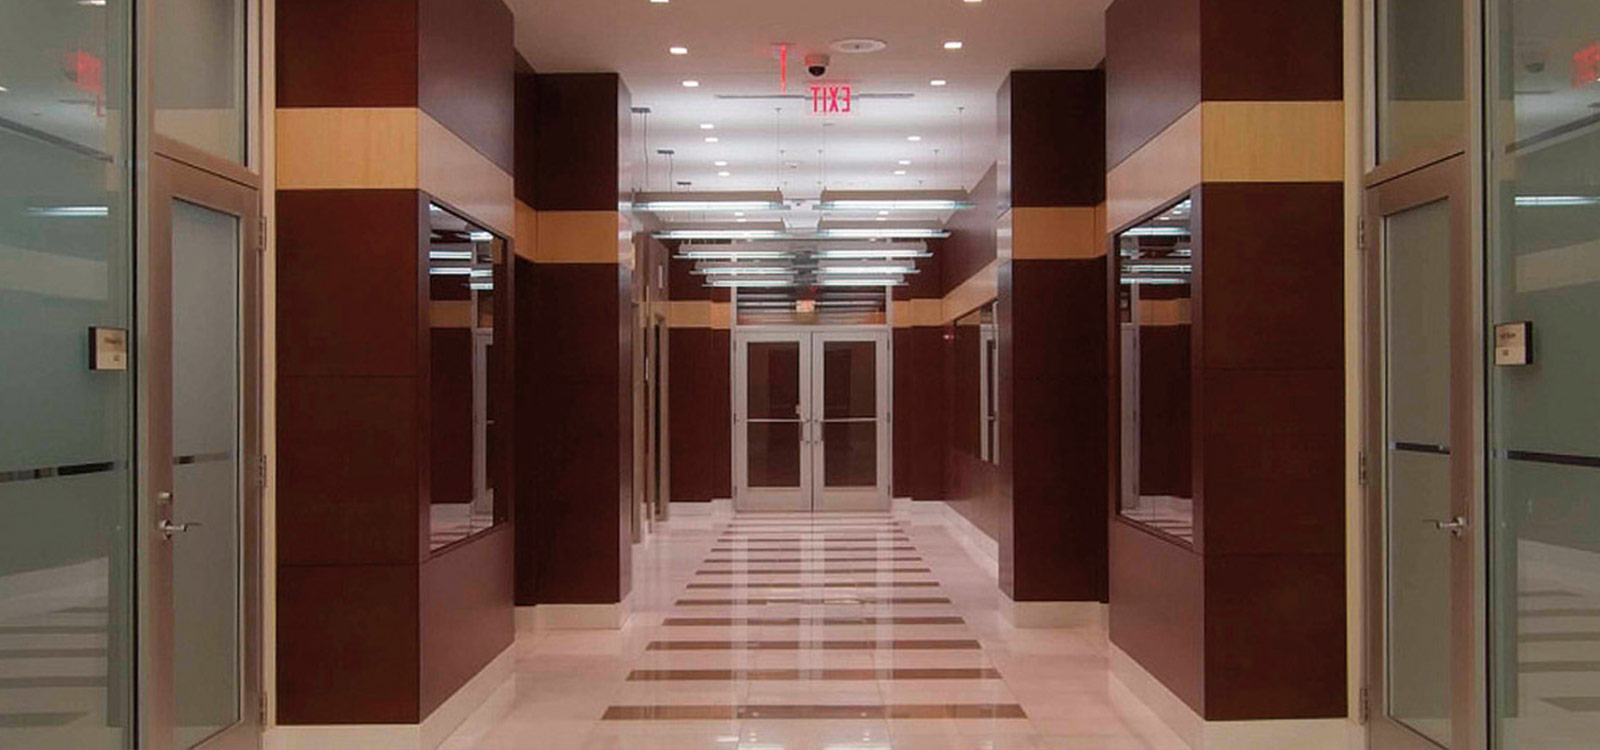 Interior doors and conference room doors